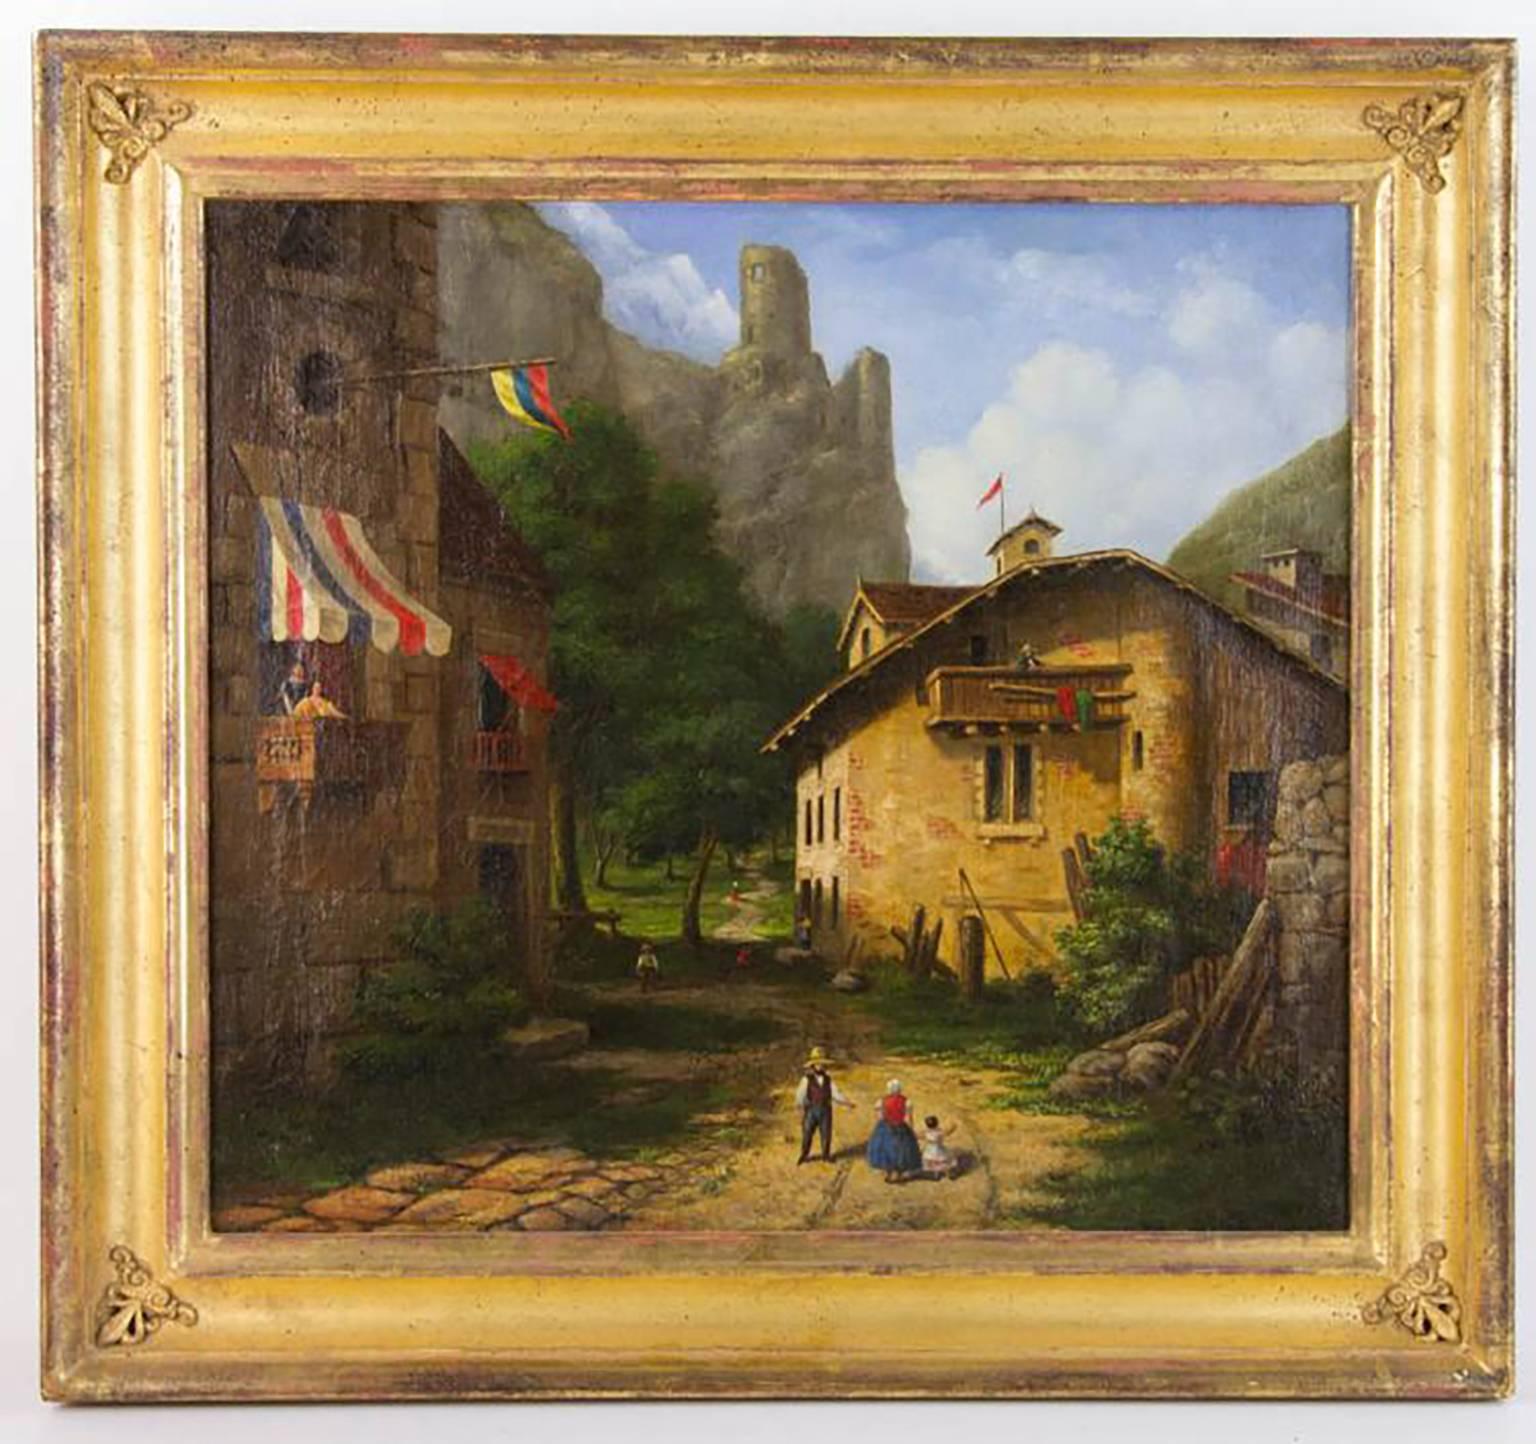 Samuel Smith Kilburn Landscape Painting - Samuel Kilburn Oil Painting Entitled “Armenian Village” – 1849